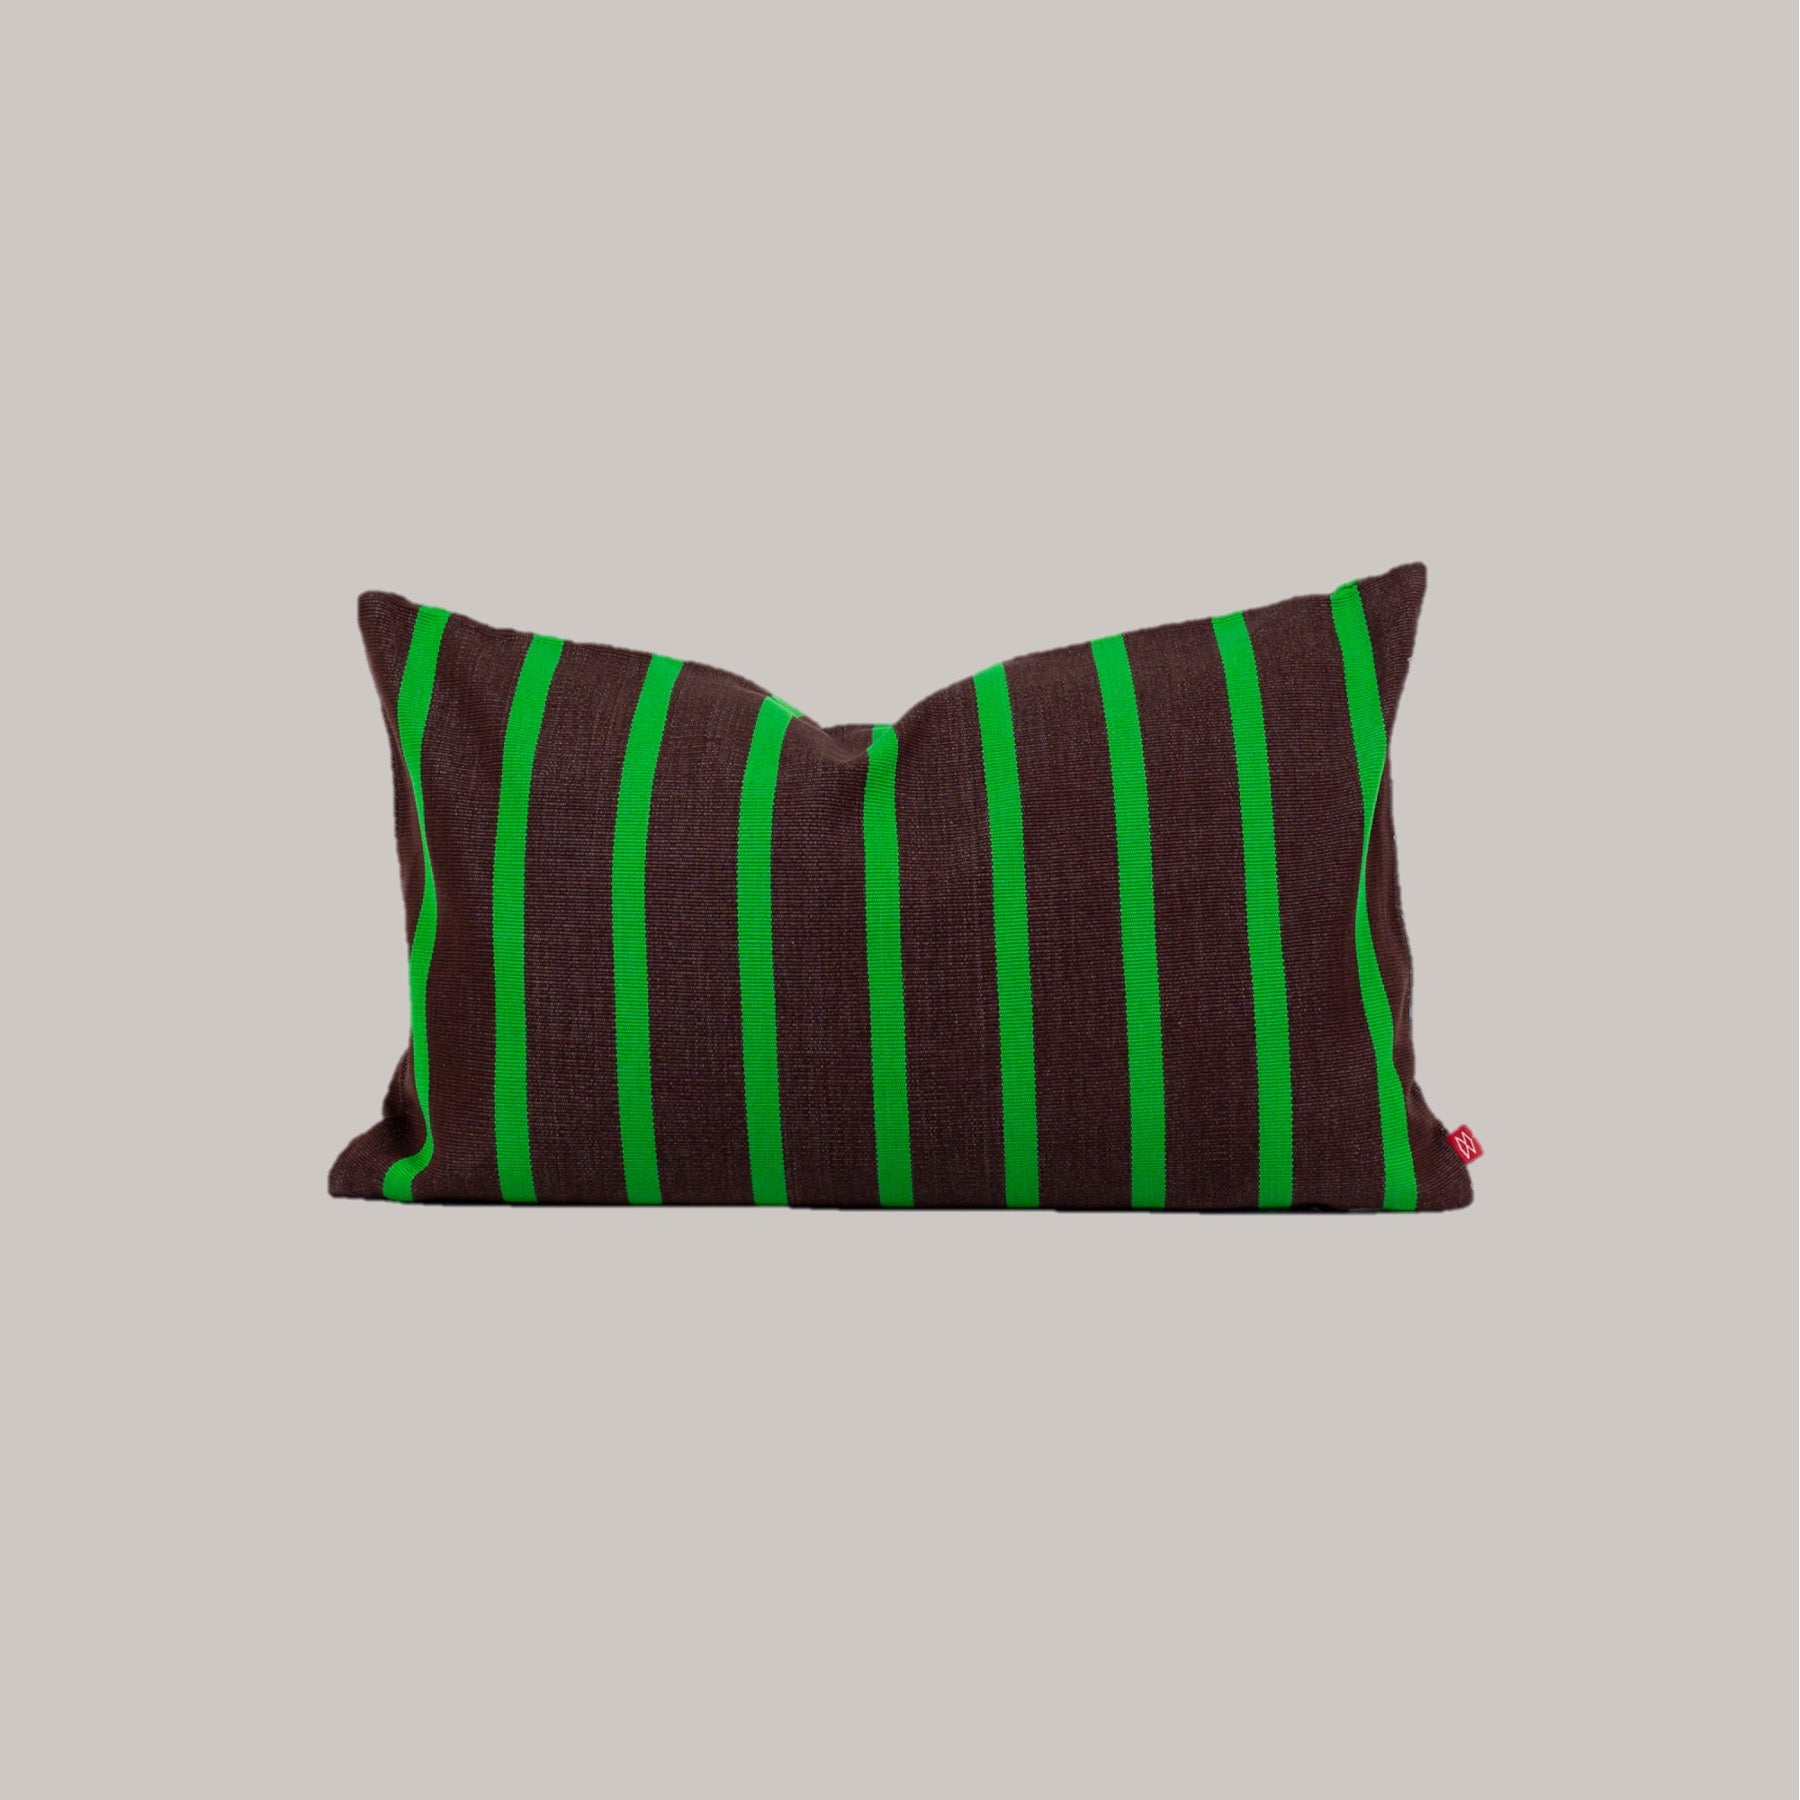 Hand-loomed Cushion Covers